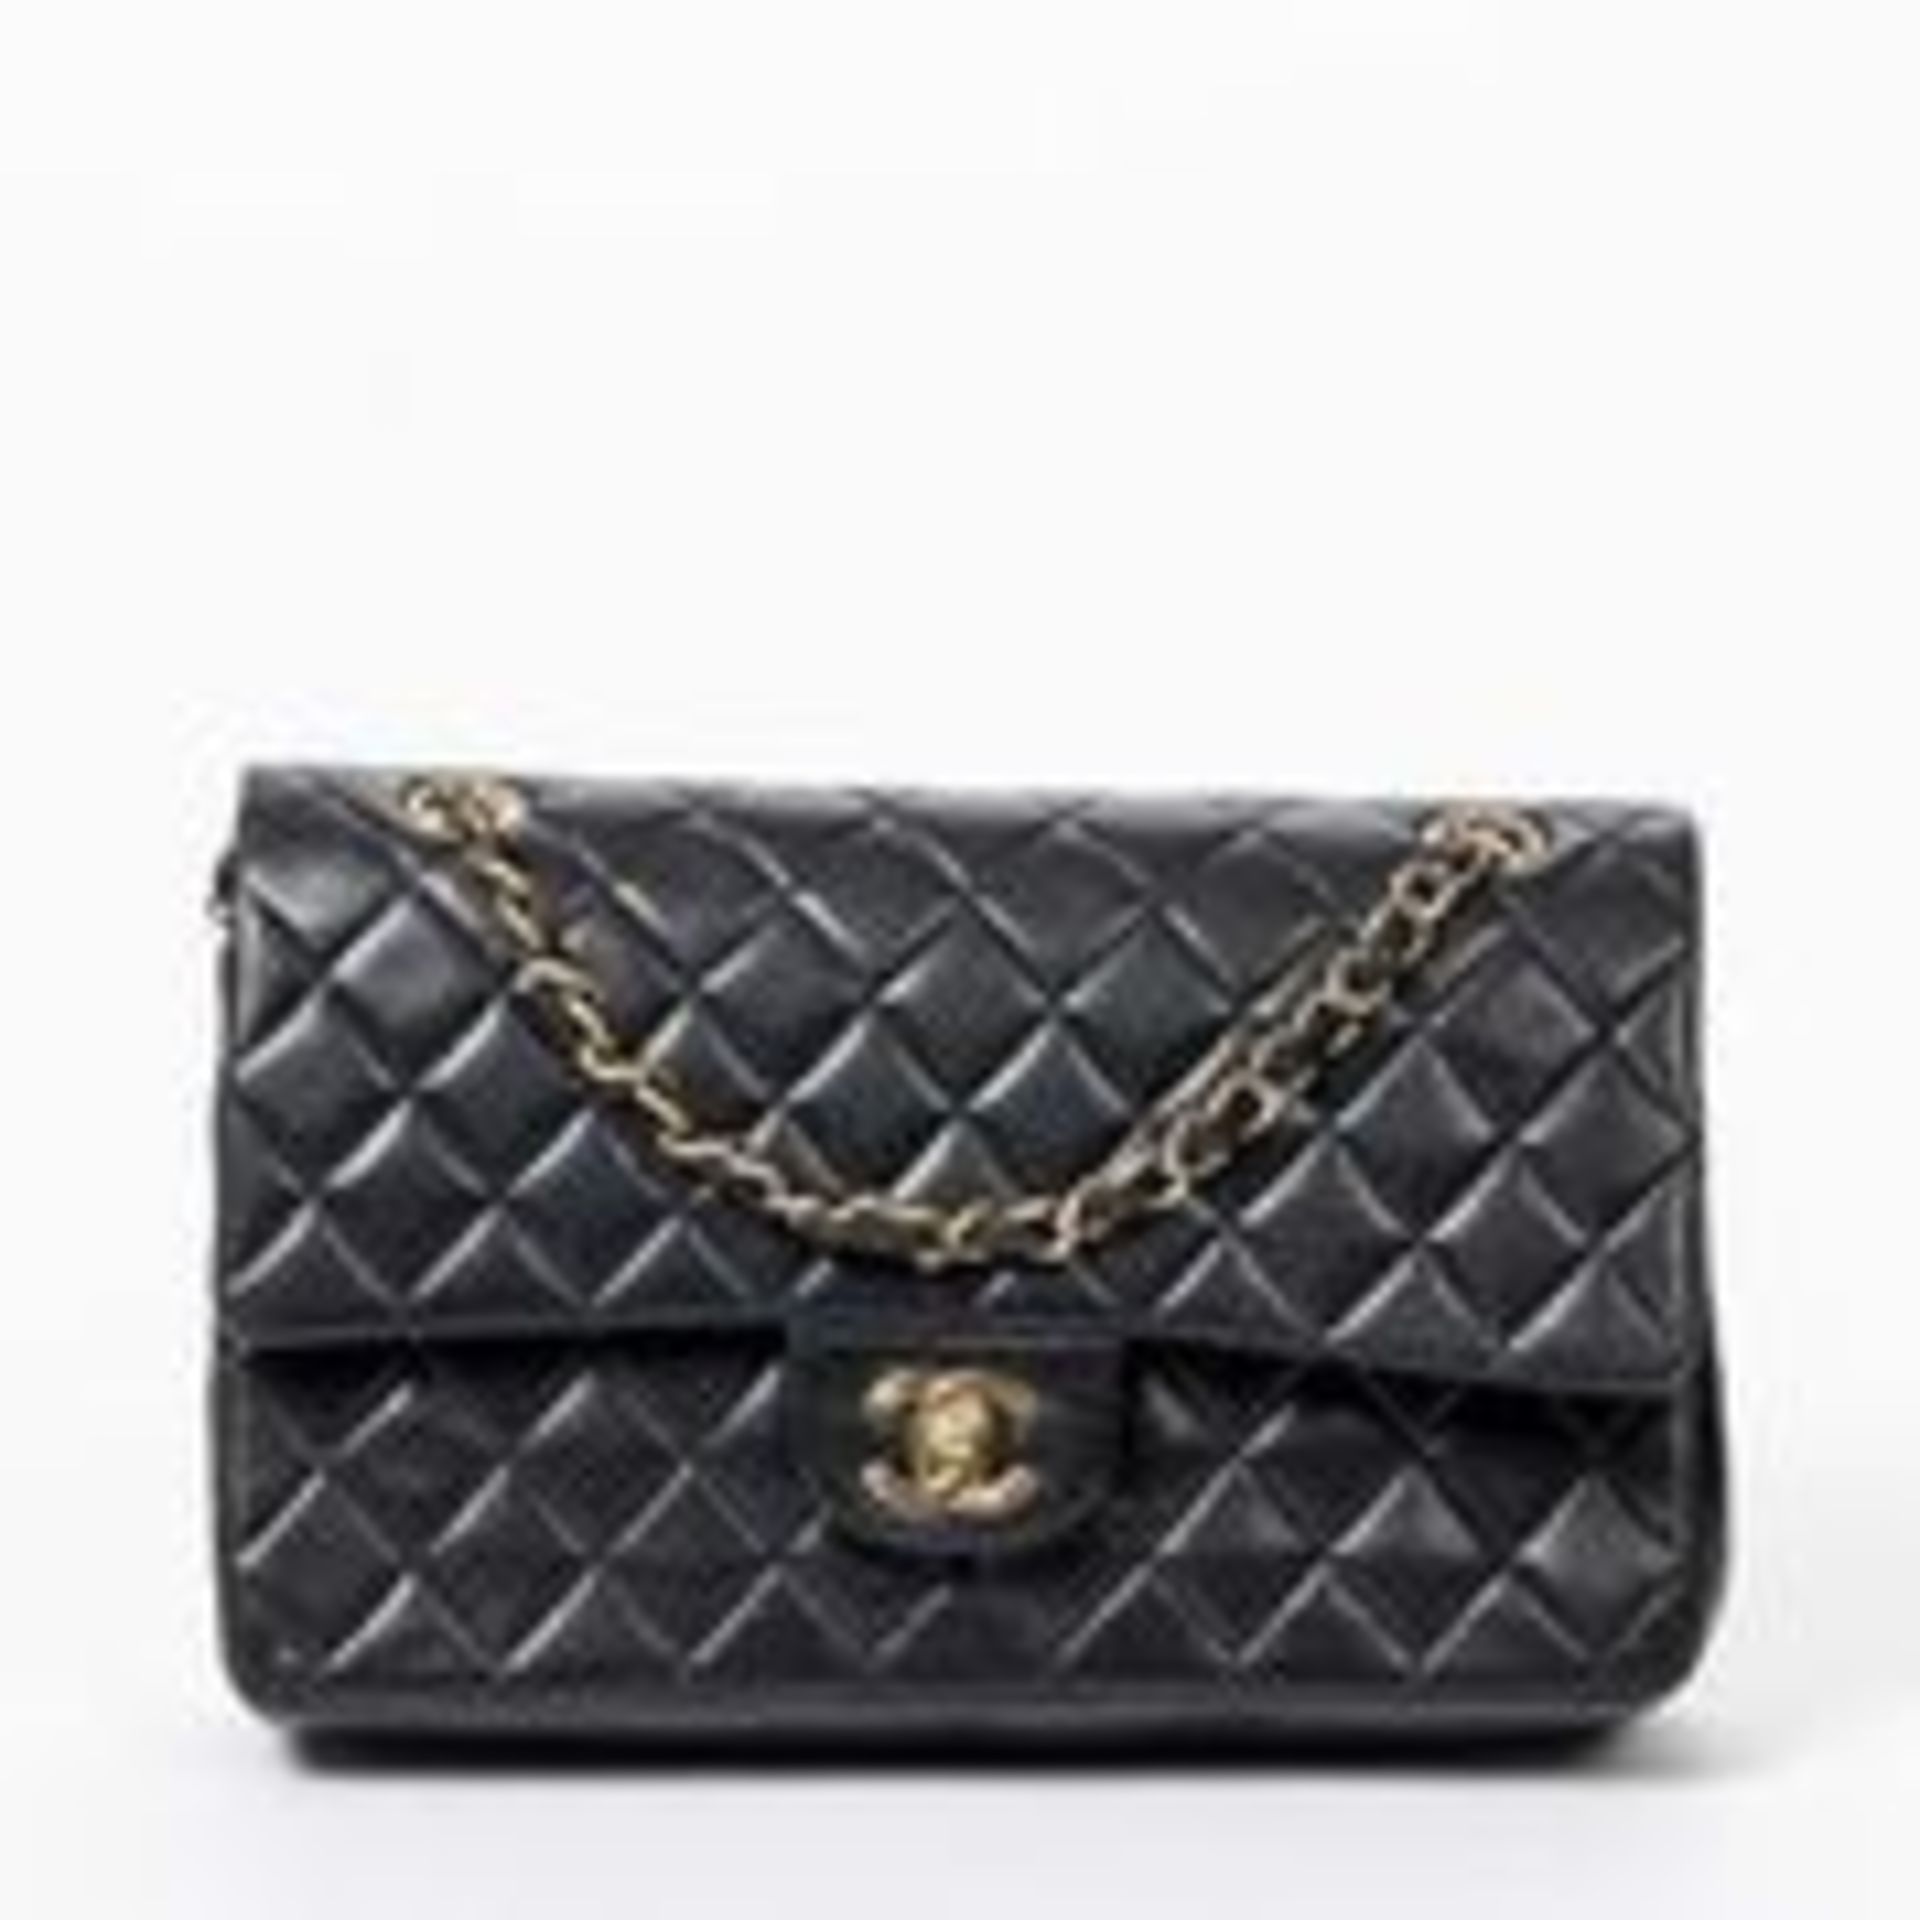 RRP £5,200 Chanel Classic Double Flap Shoulder Bag Black - AAP6651 - Grade A - Please Contact Us